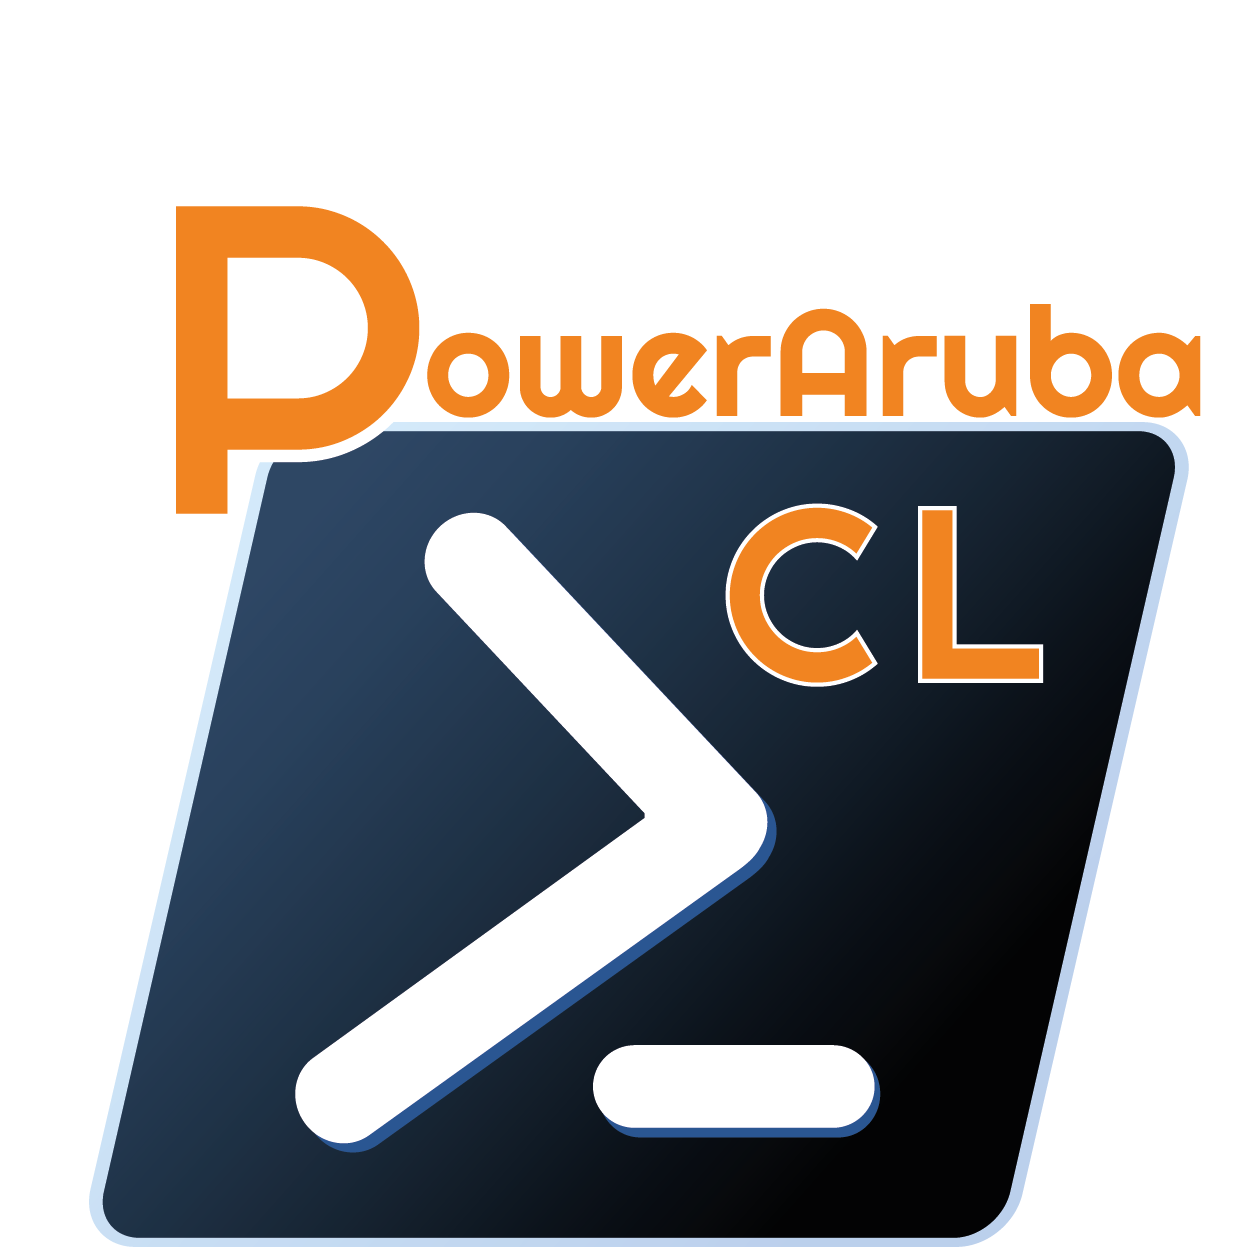 PowerArubaCL icon